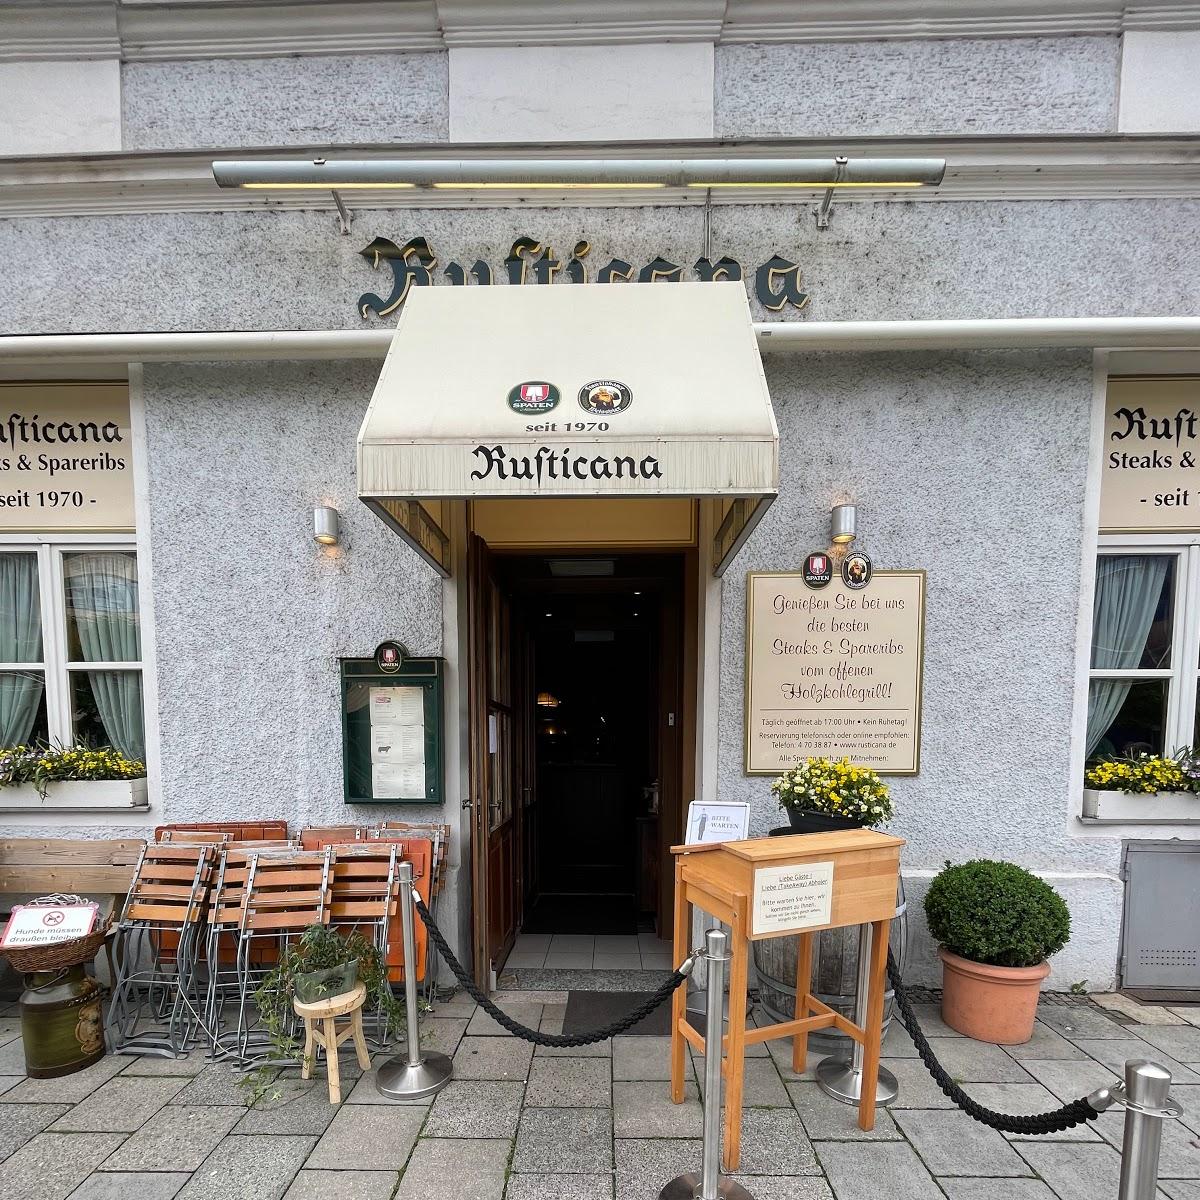 Restaurant "Rusticana" in München